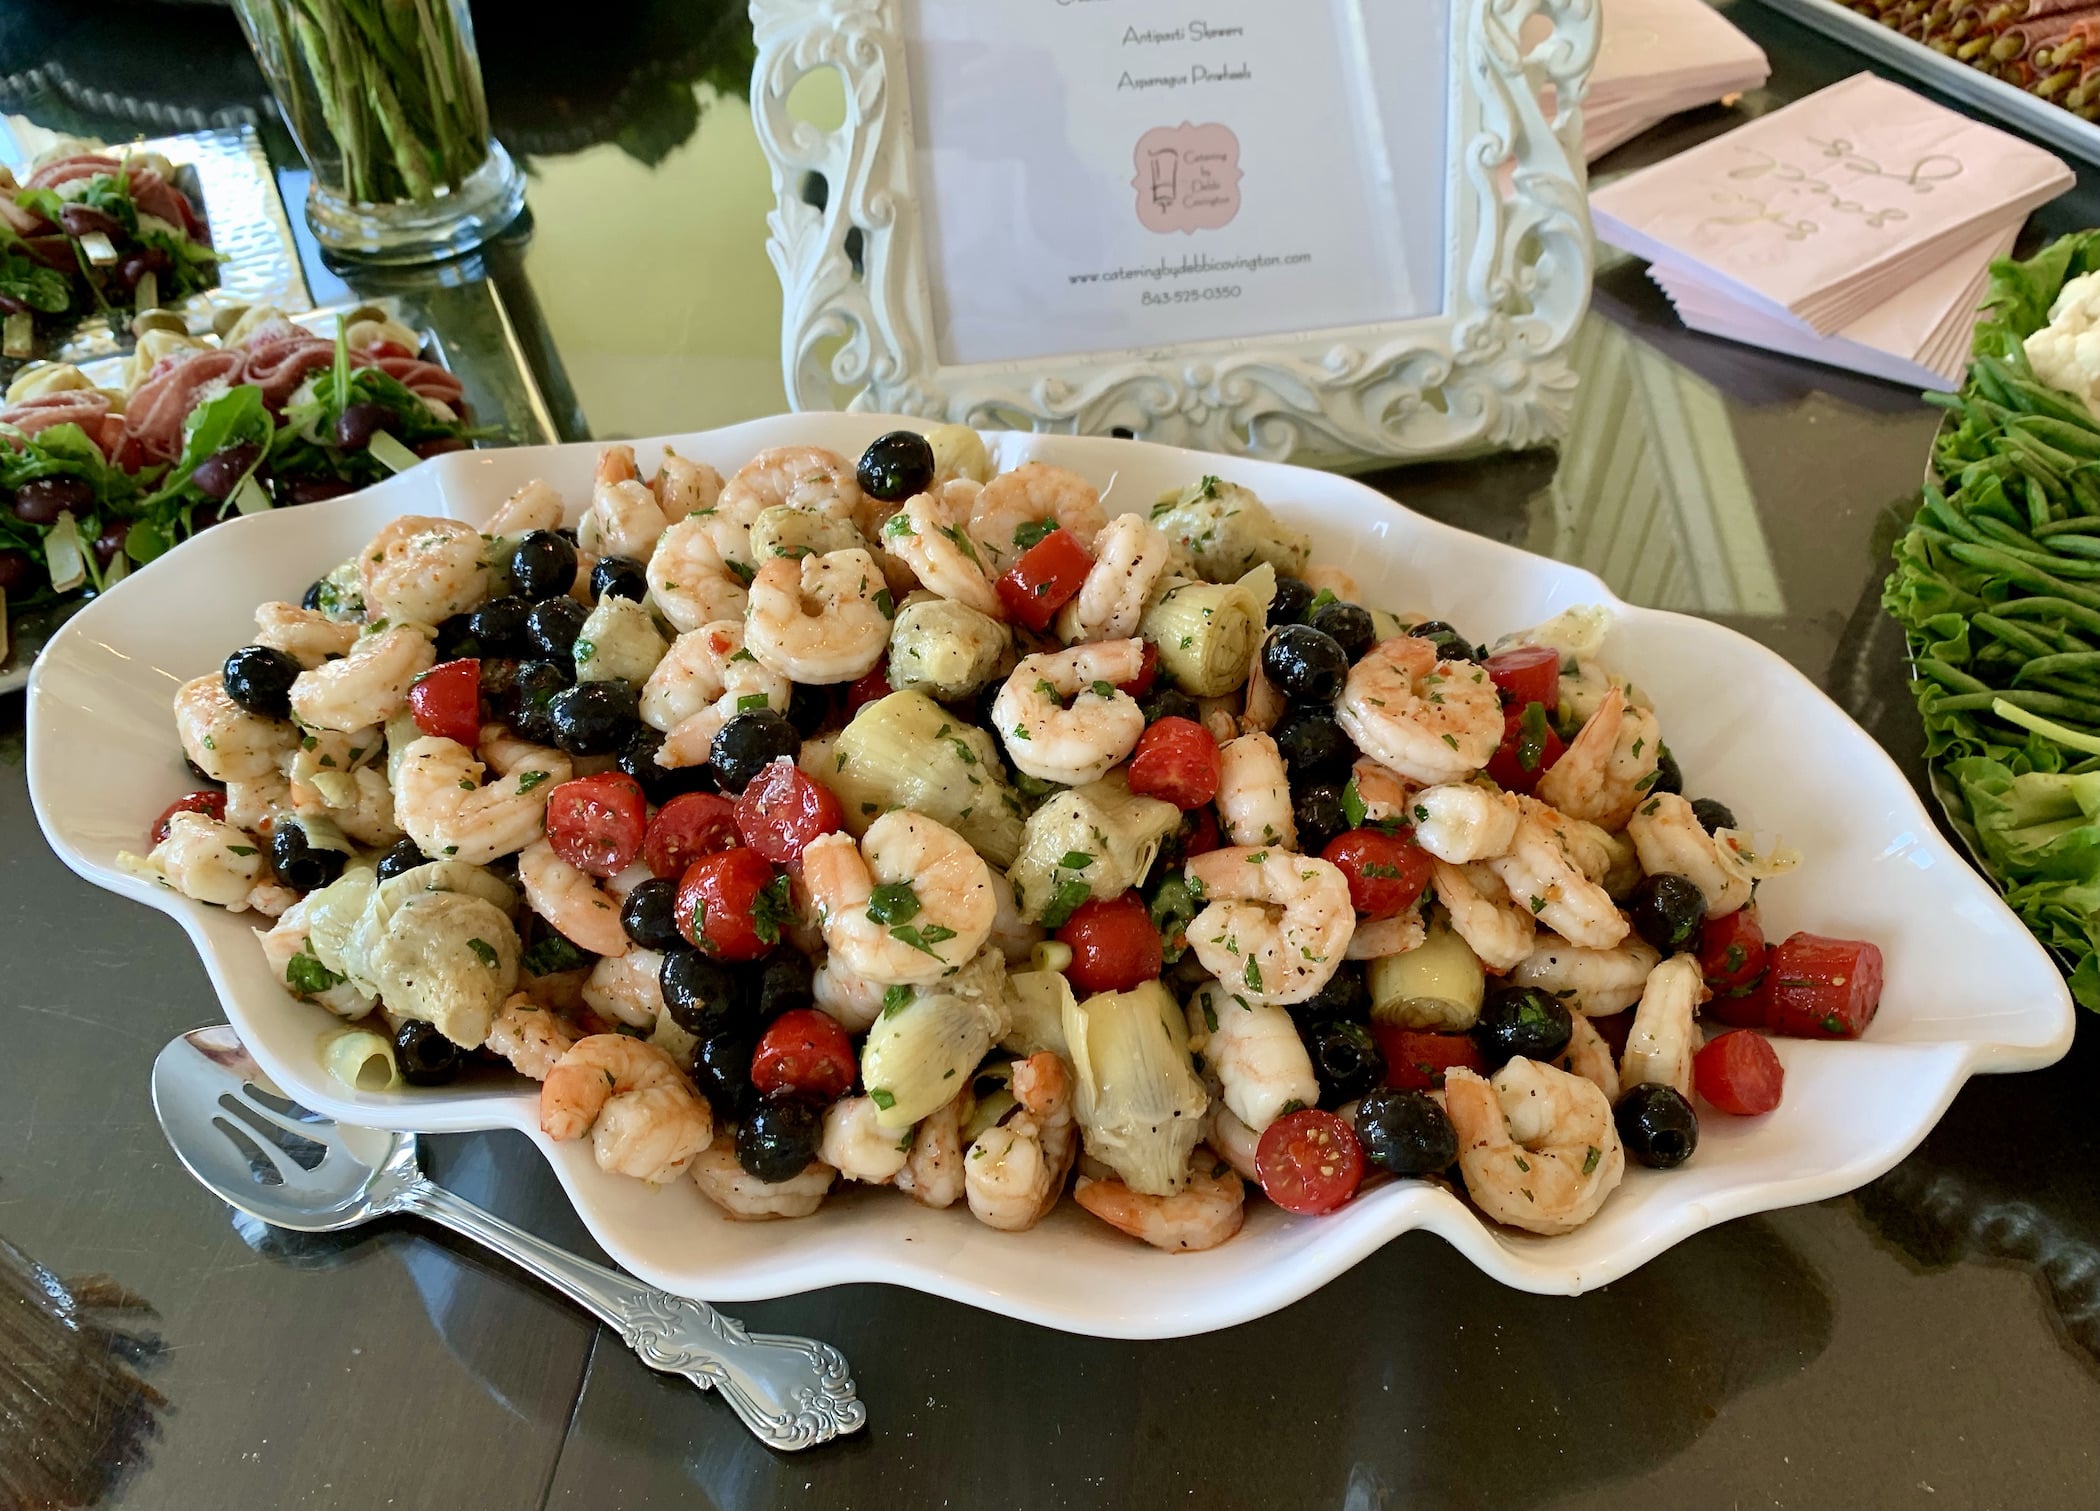 Herb-seasoned shrimp teamed with artichoke hearts, grape tomatoes, black olives and feta cheese.